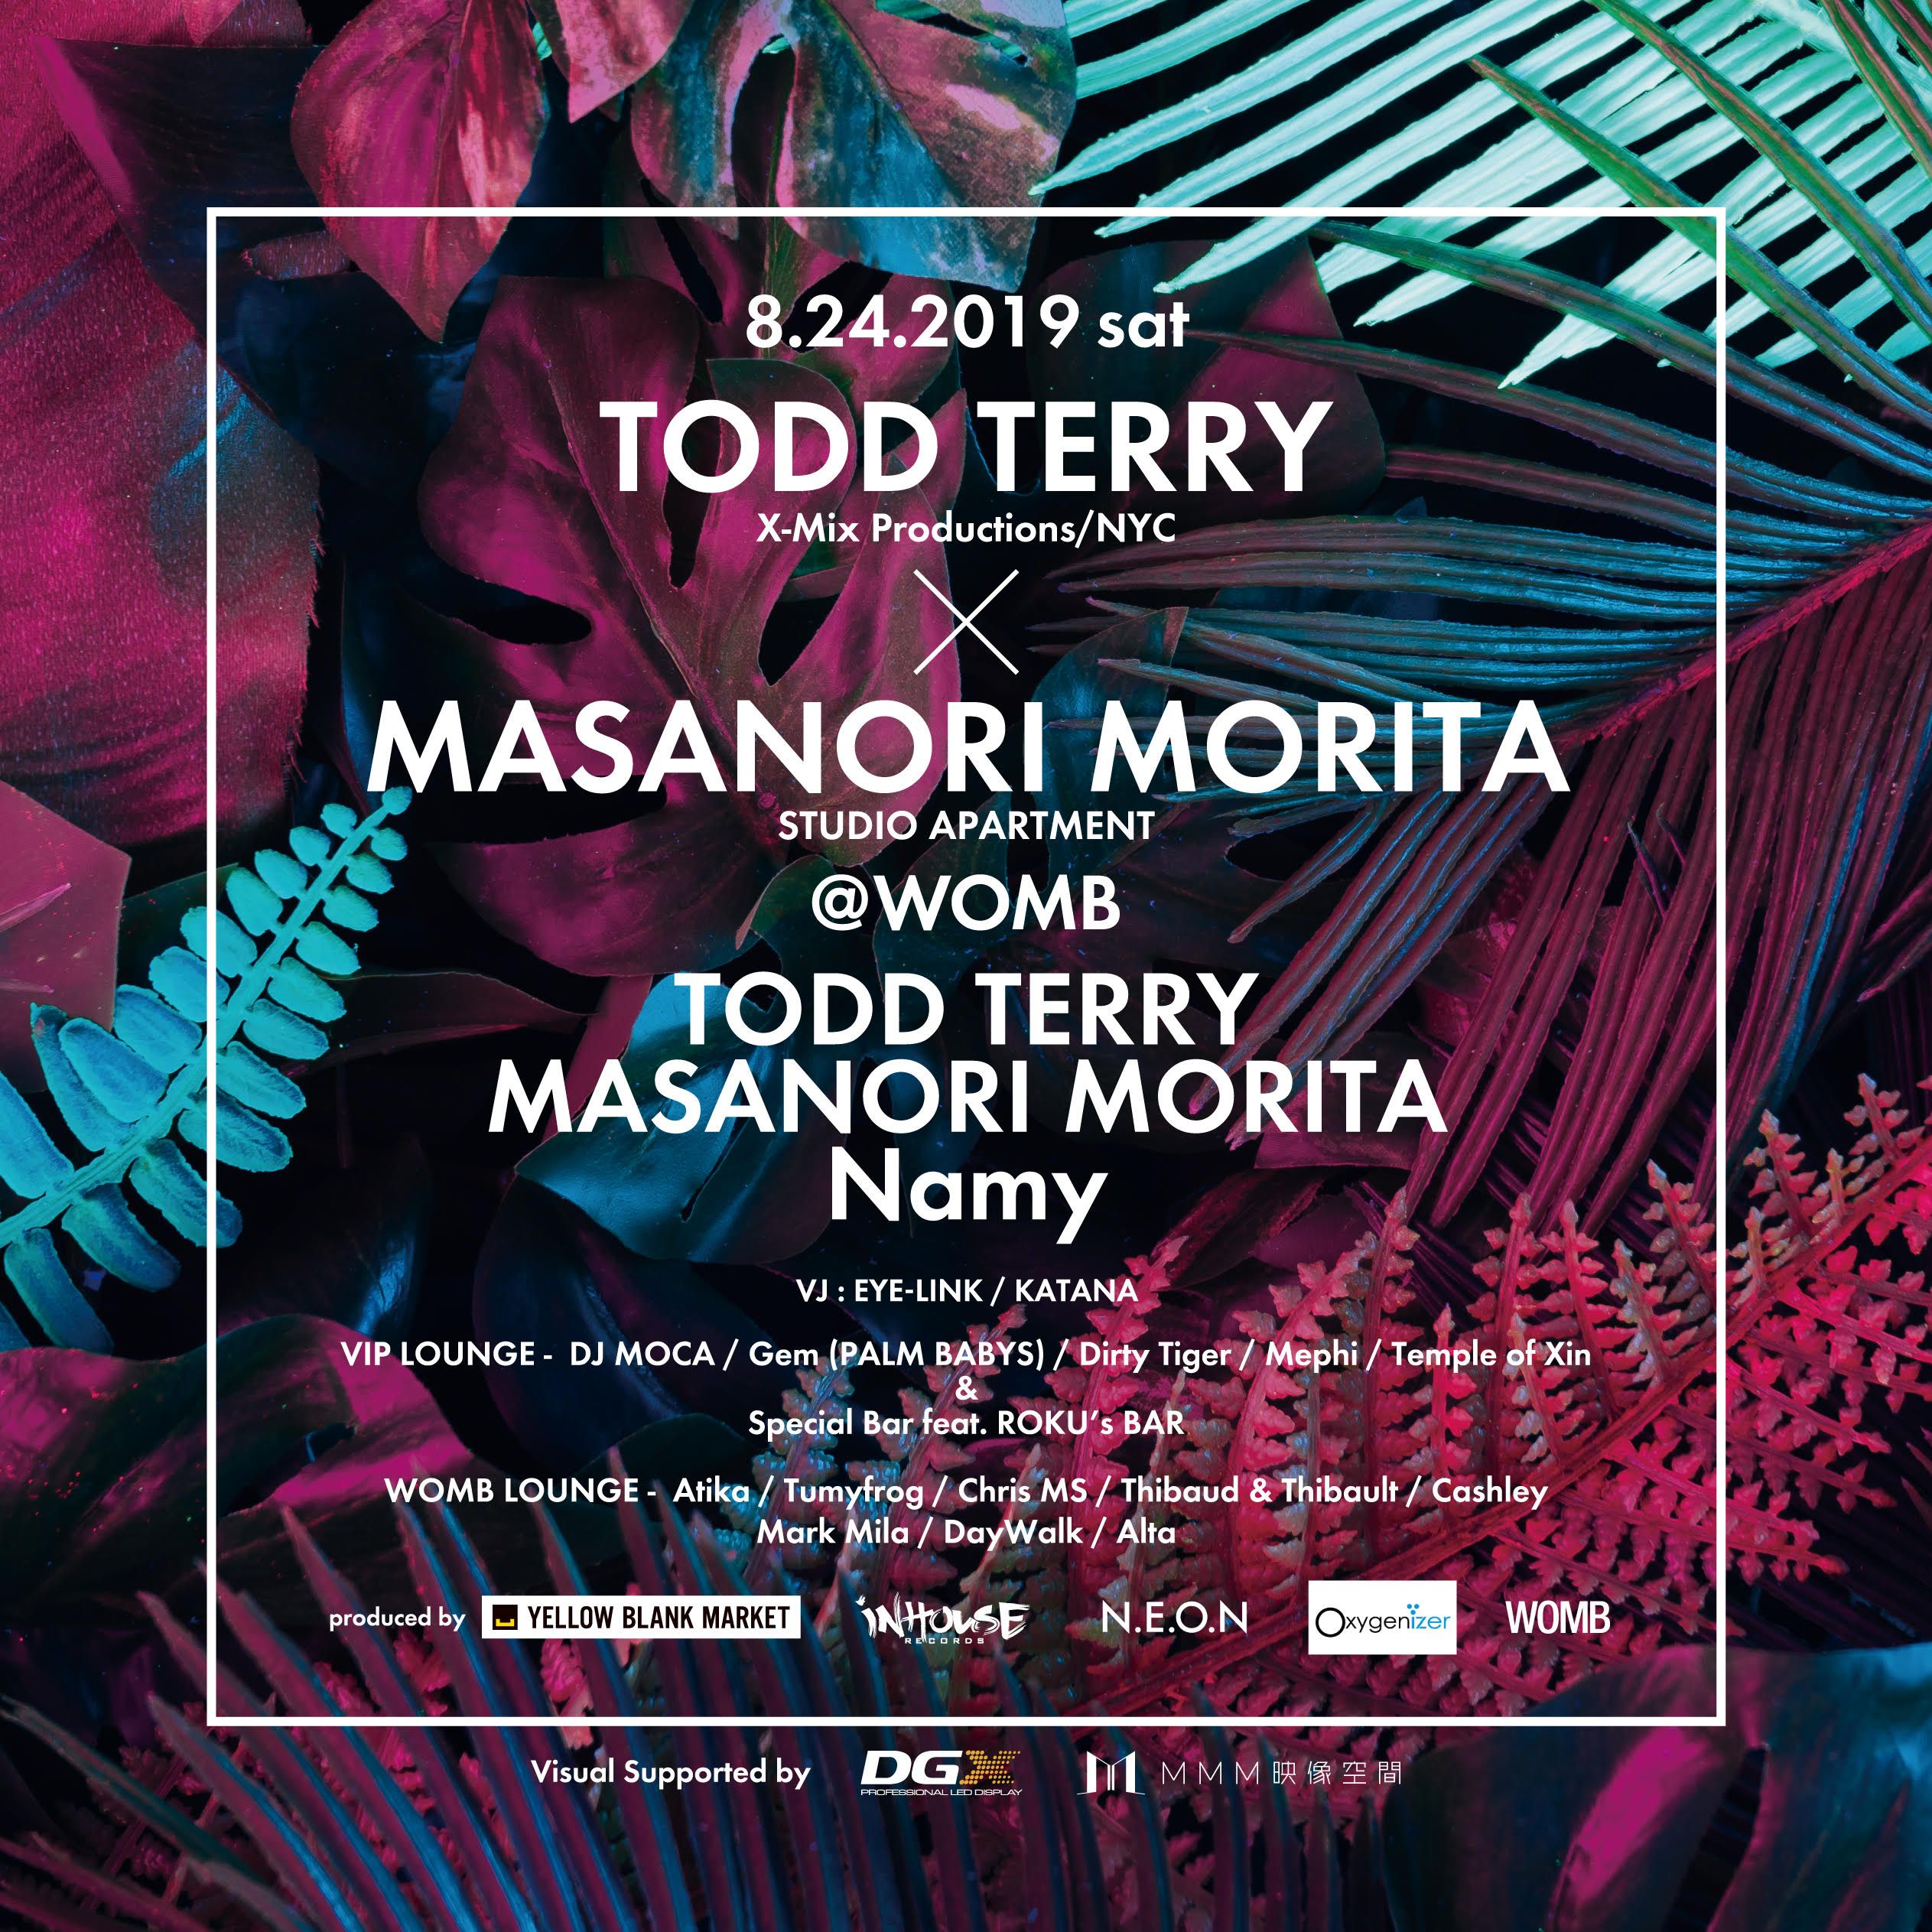 “TODD TERRY × MASANORI MORITA” at WOMB Produced by YELLOW BLANK MARKET